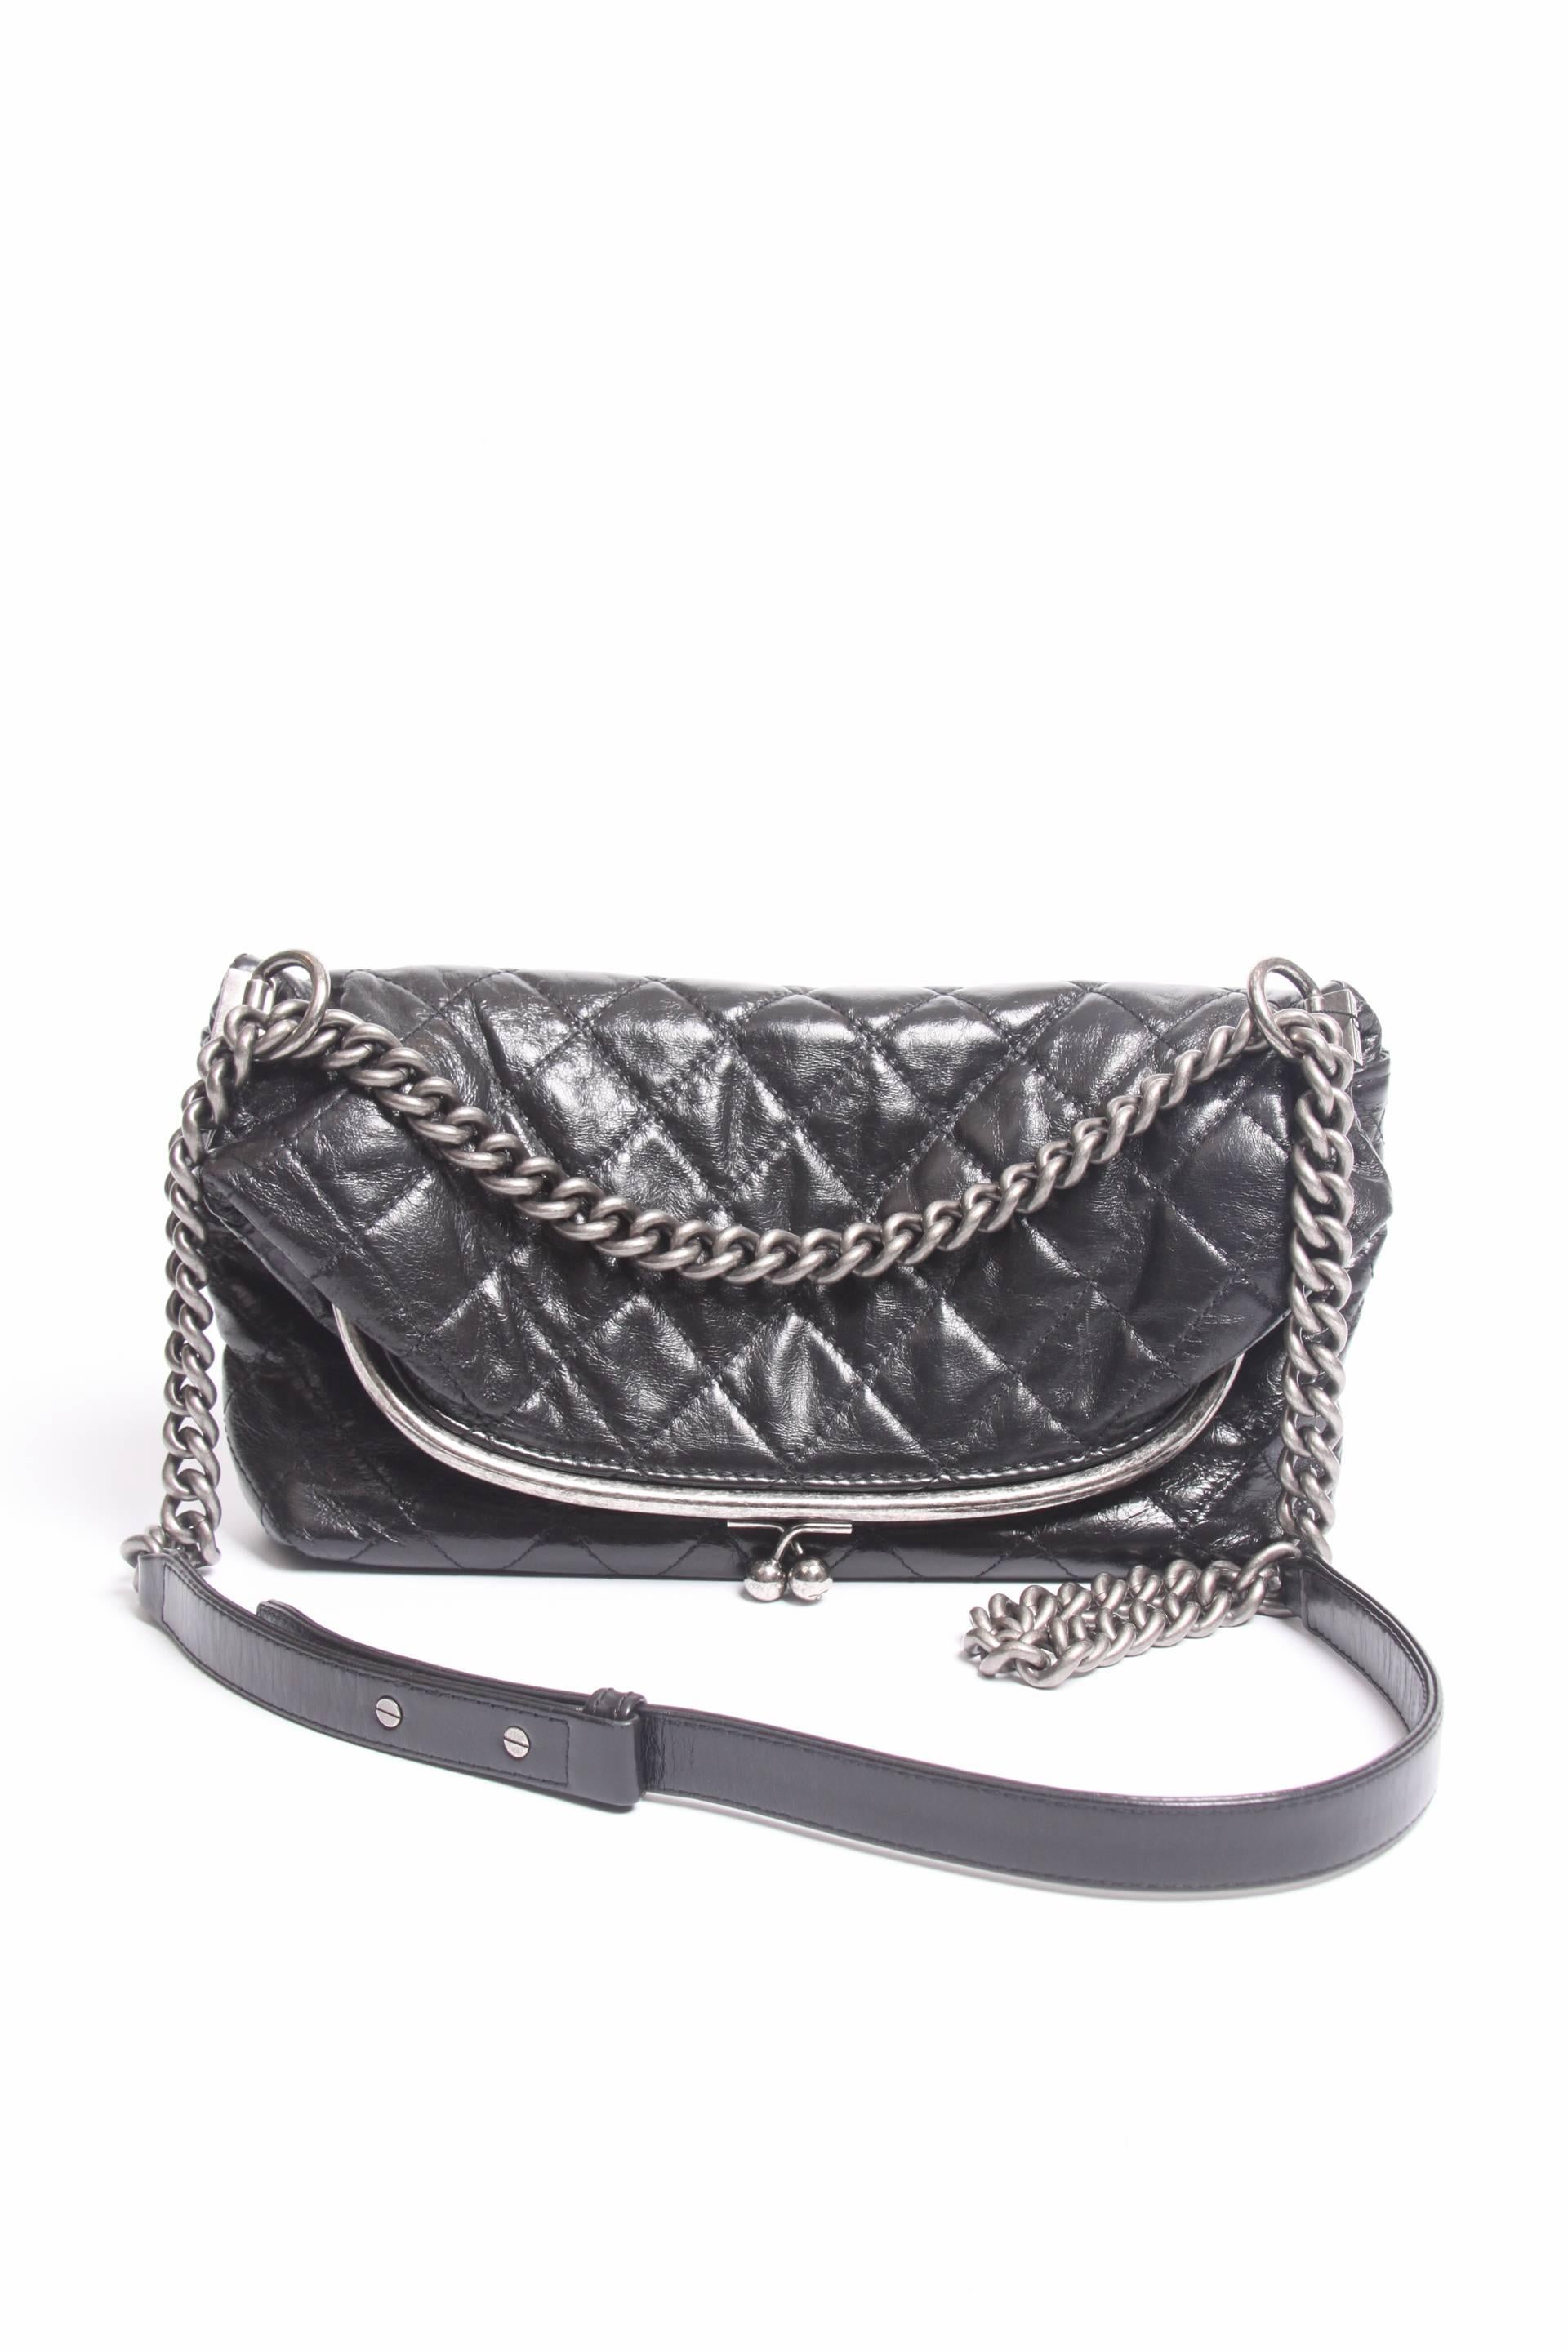 Chanel Tabatière Kiss Lock Bag - black leather - crossbody 2016 1